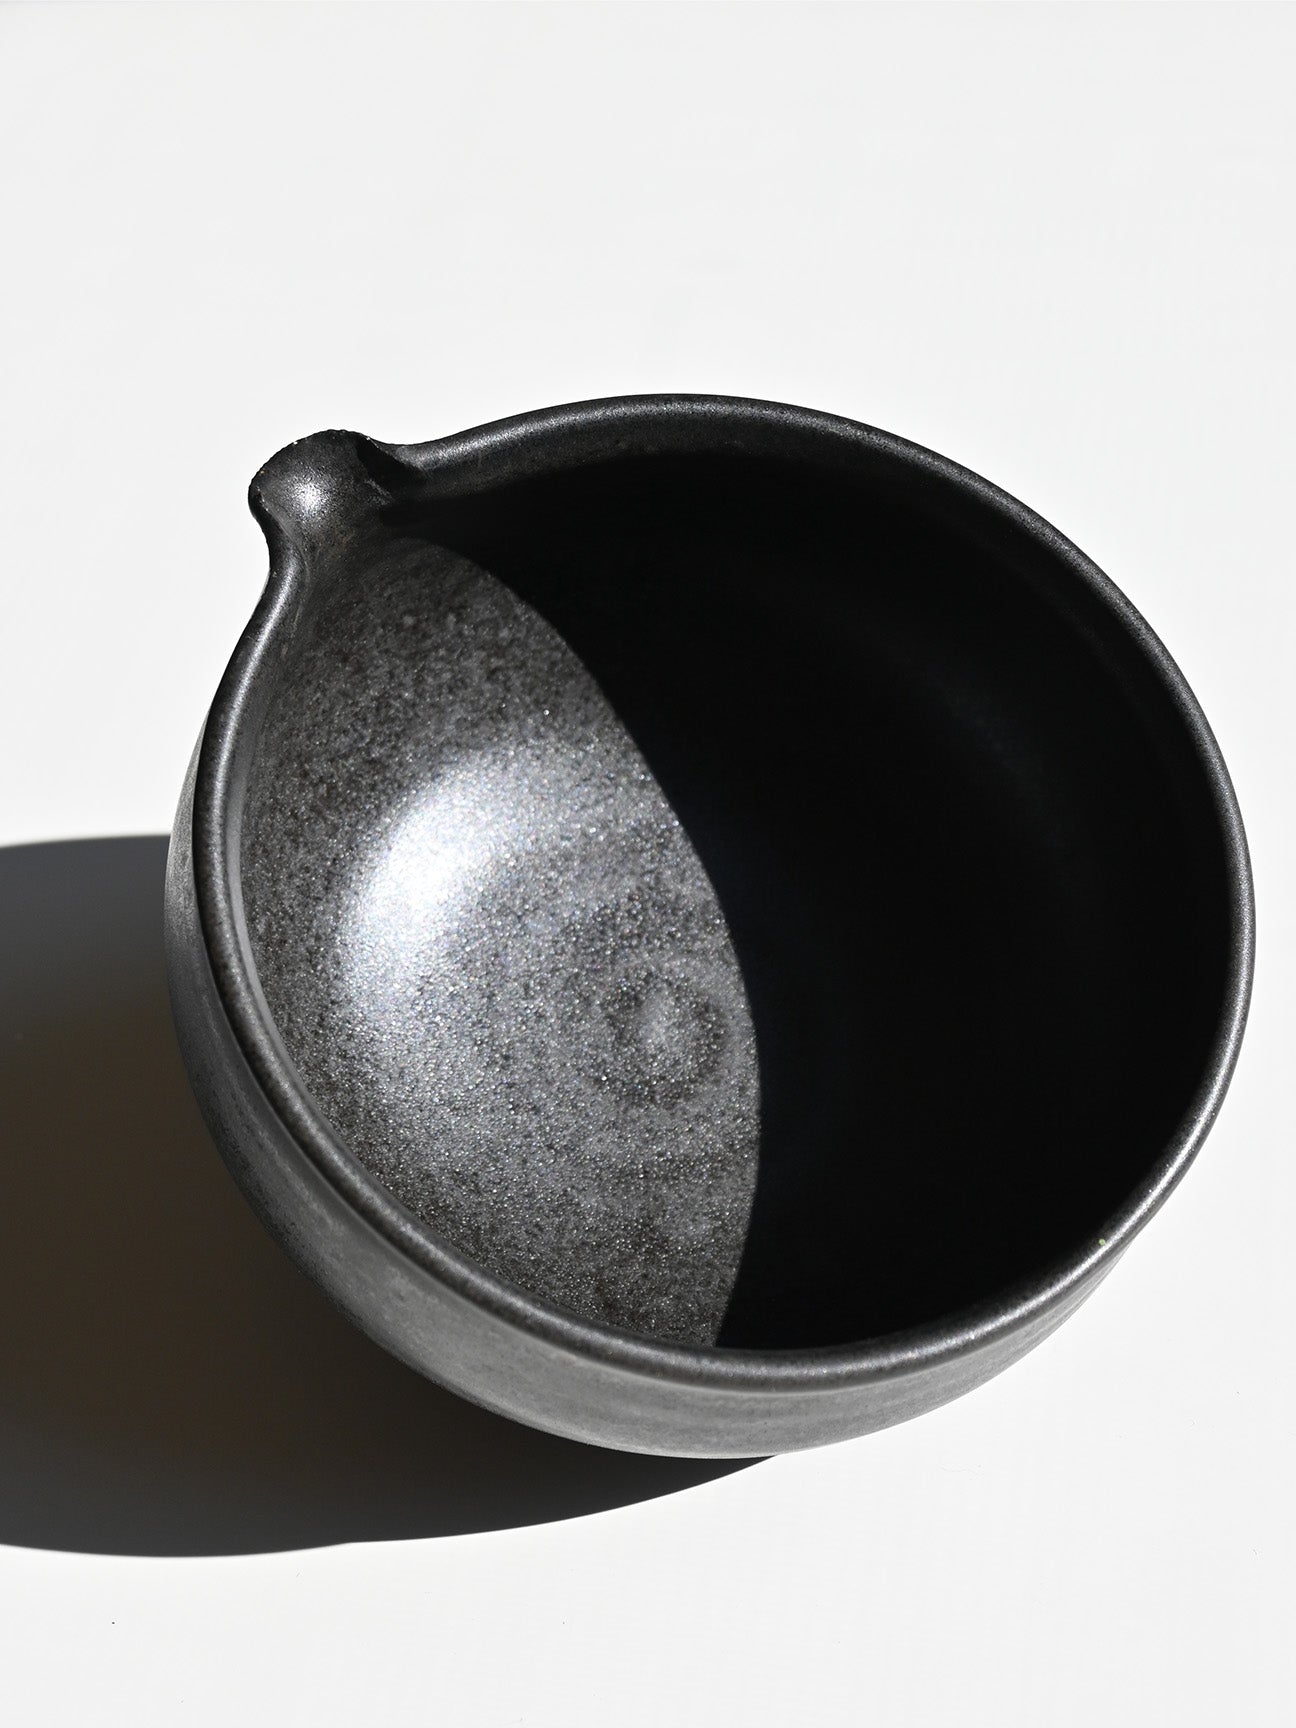 Katakuchi Bowl by David T. Kim - Black